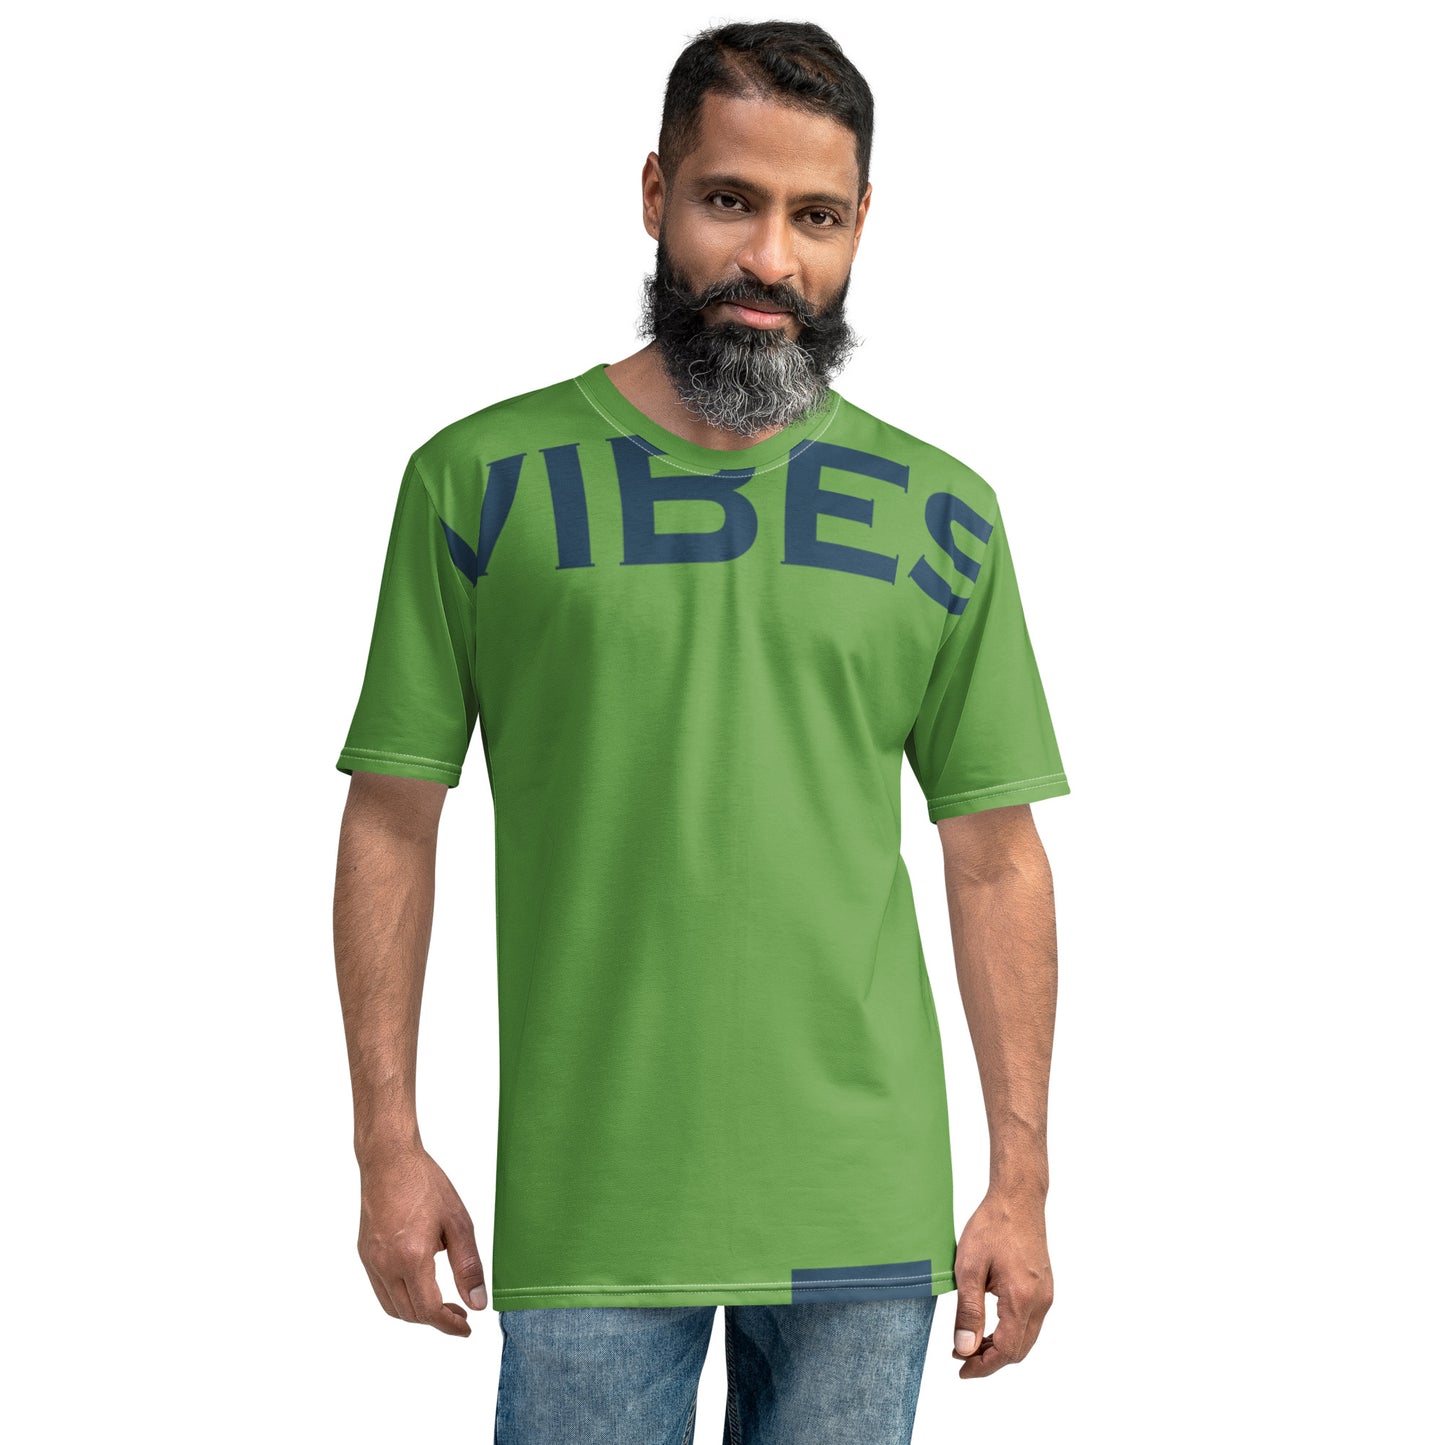 TIME OF VIBES - Premium Men's T-Shirt VIBES (Green/Arapawa) - €49.00